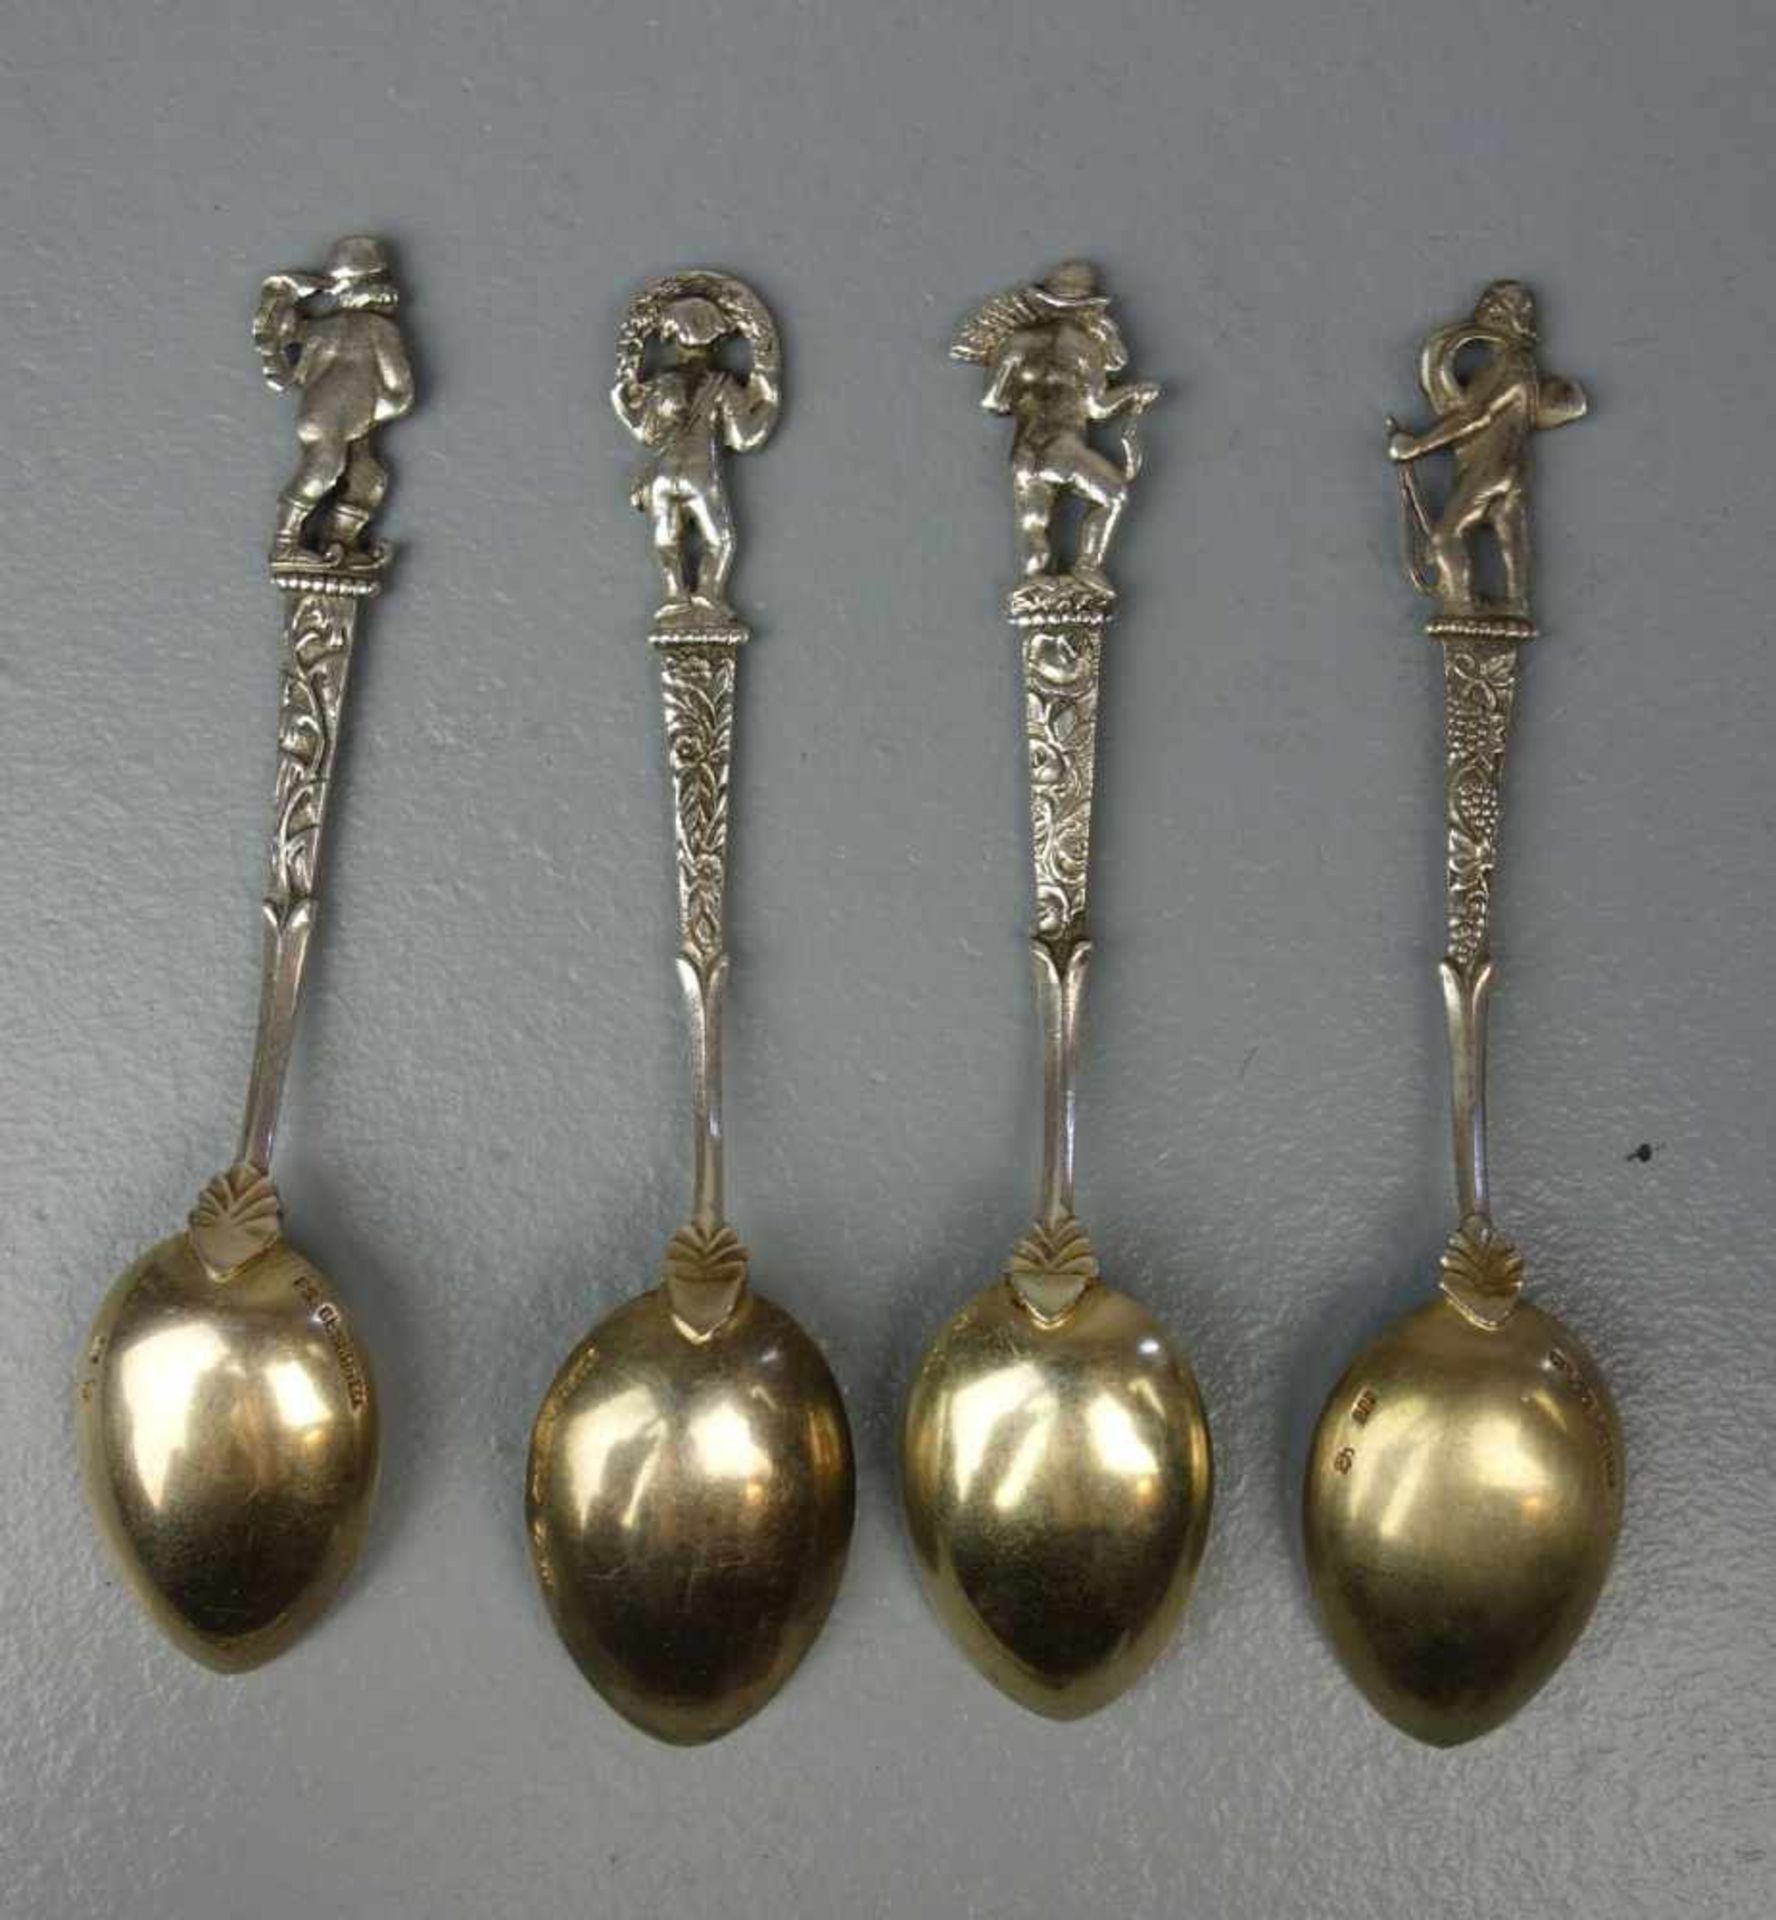 8 KLEINE LÖFFEL / MOKKALÖFFEL / mocha spoons, 20. Jh., Silber, Laffen partiell mit Restvergoldung. - Image 3 of 5